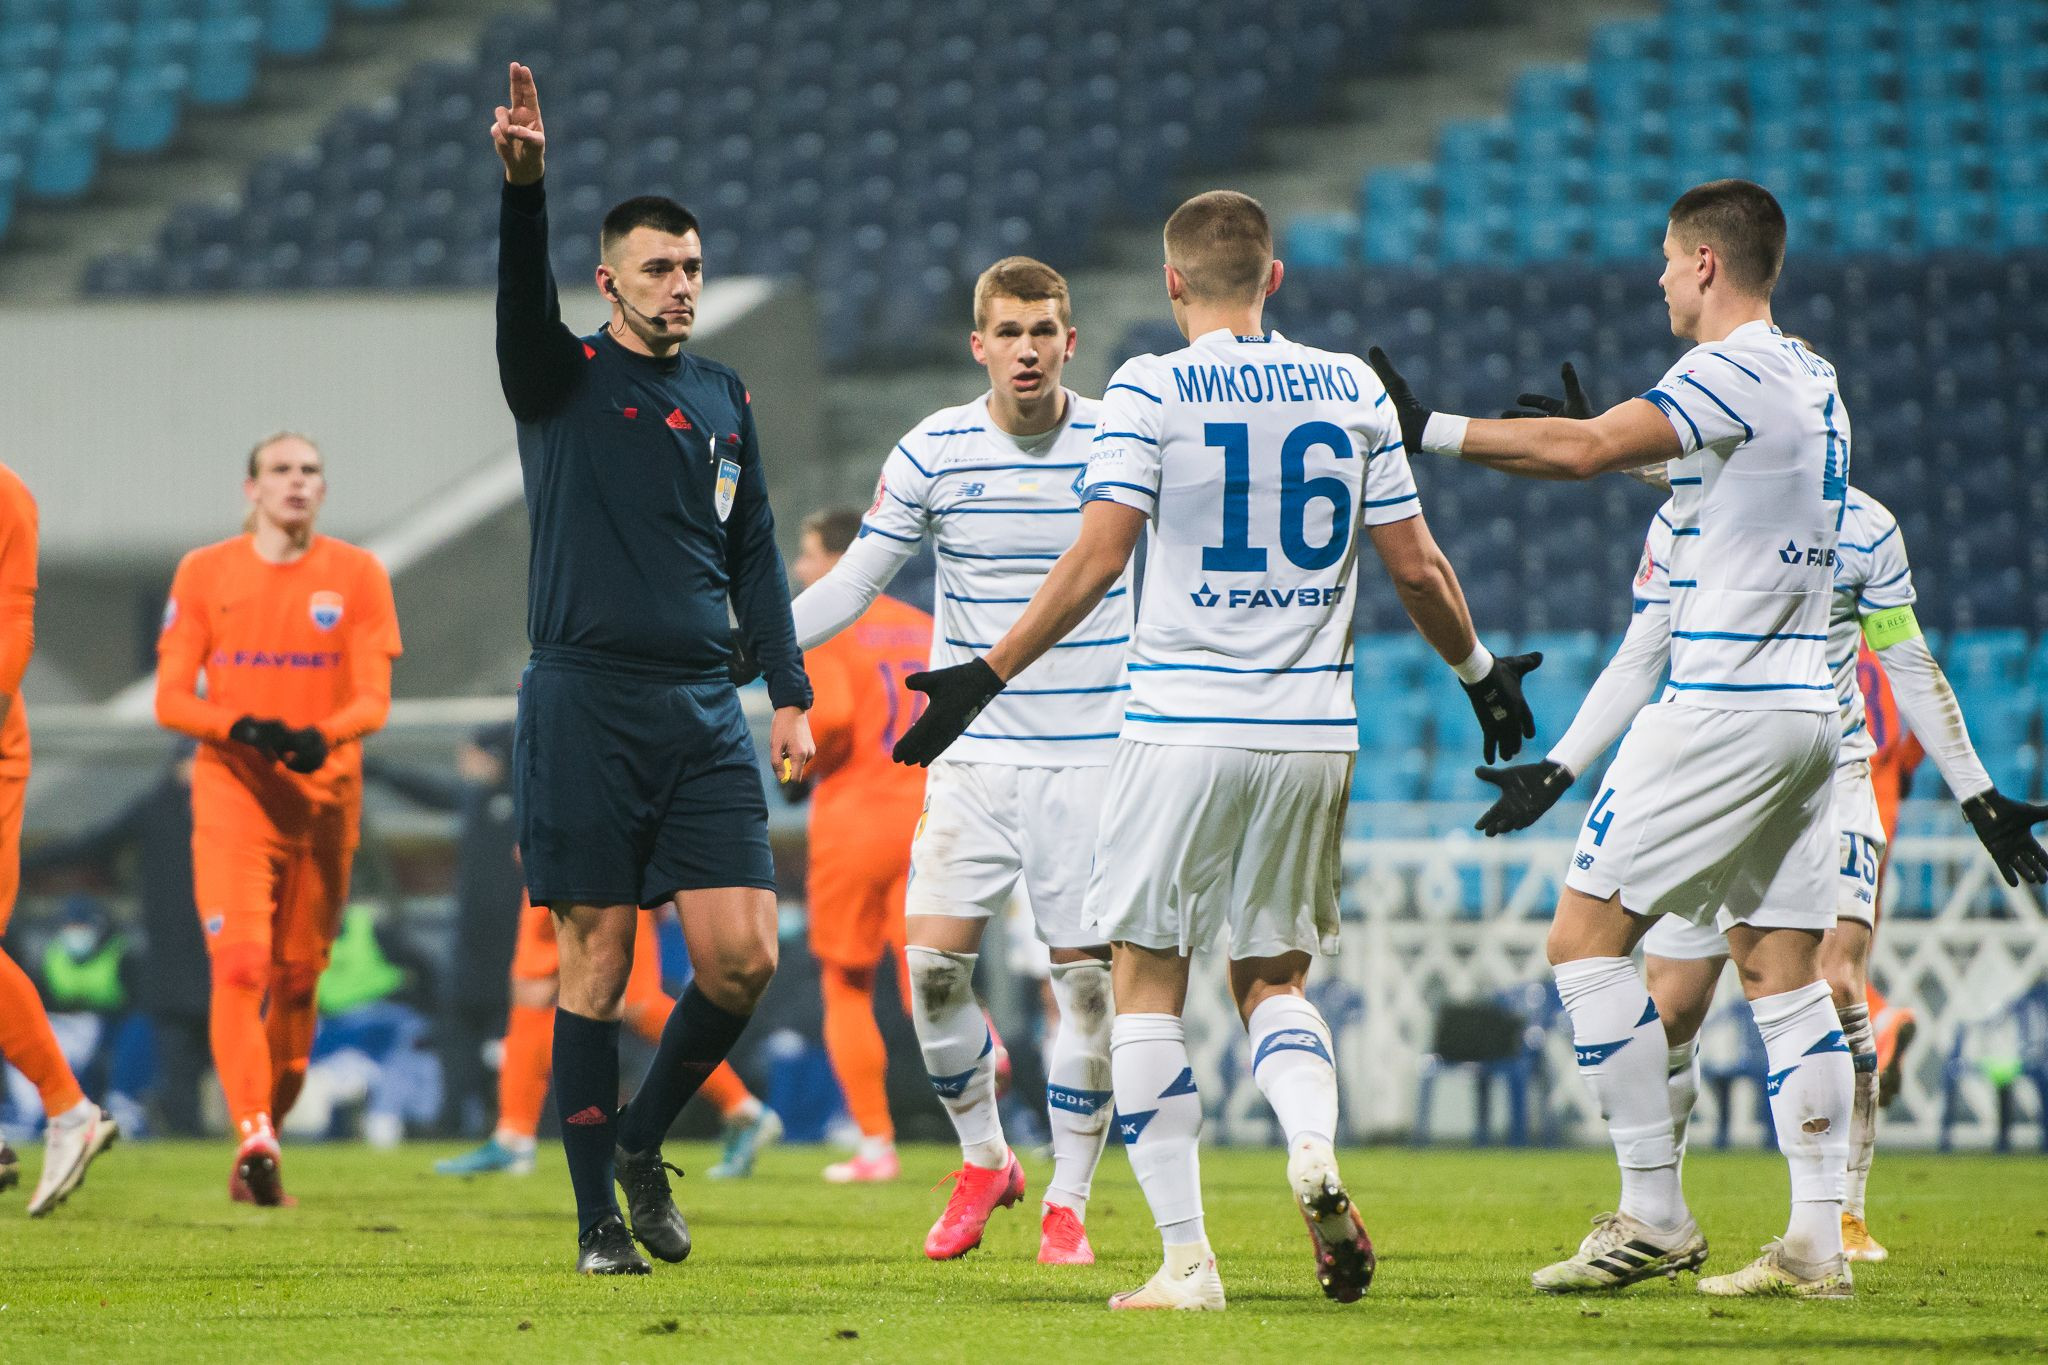 Andriy Kovalenko – Dynamo vs Dnipro-1 match referee